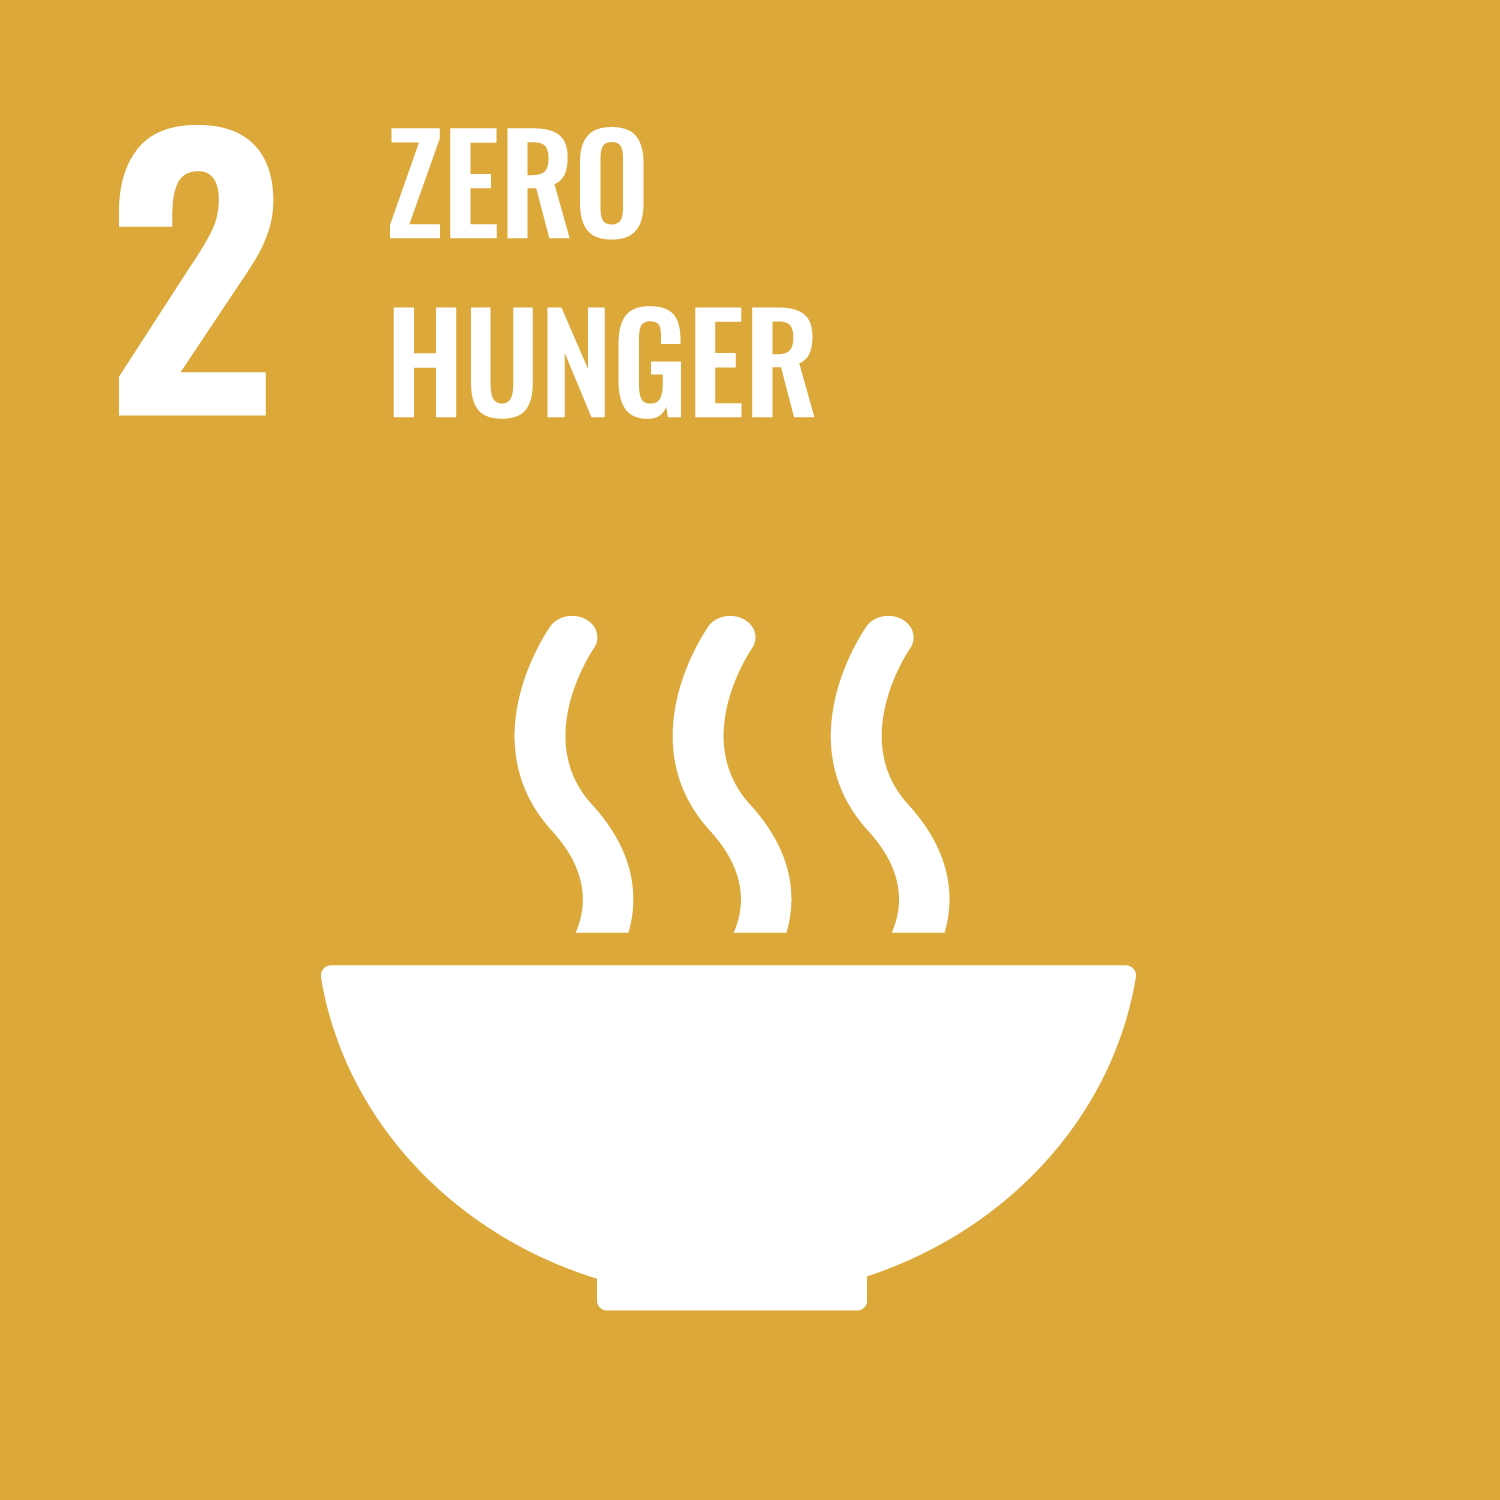 SDG 2 Graphic: Zero Hunger